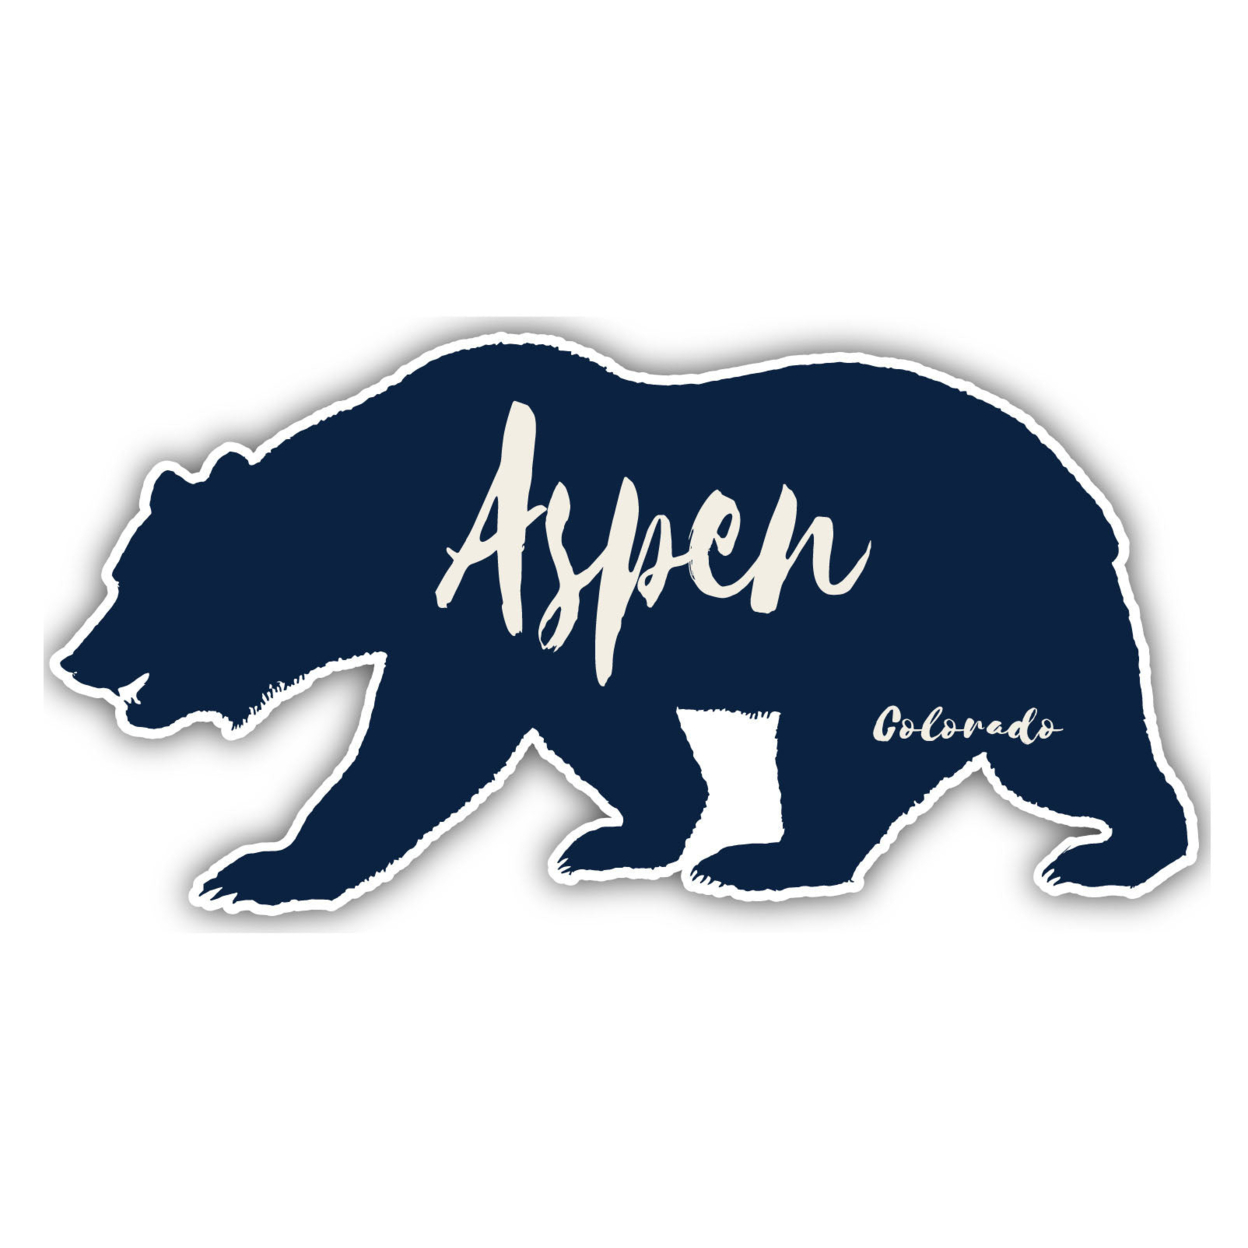 Aspen Colorado Souvenir Decorative Stickers (Choose Theme And Size) - Single Unit, 6-Inch, Great Outdoors